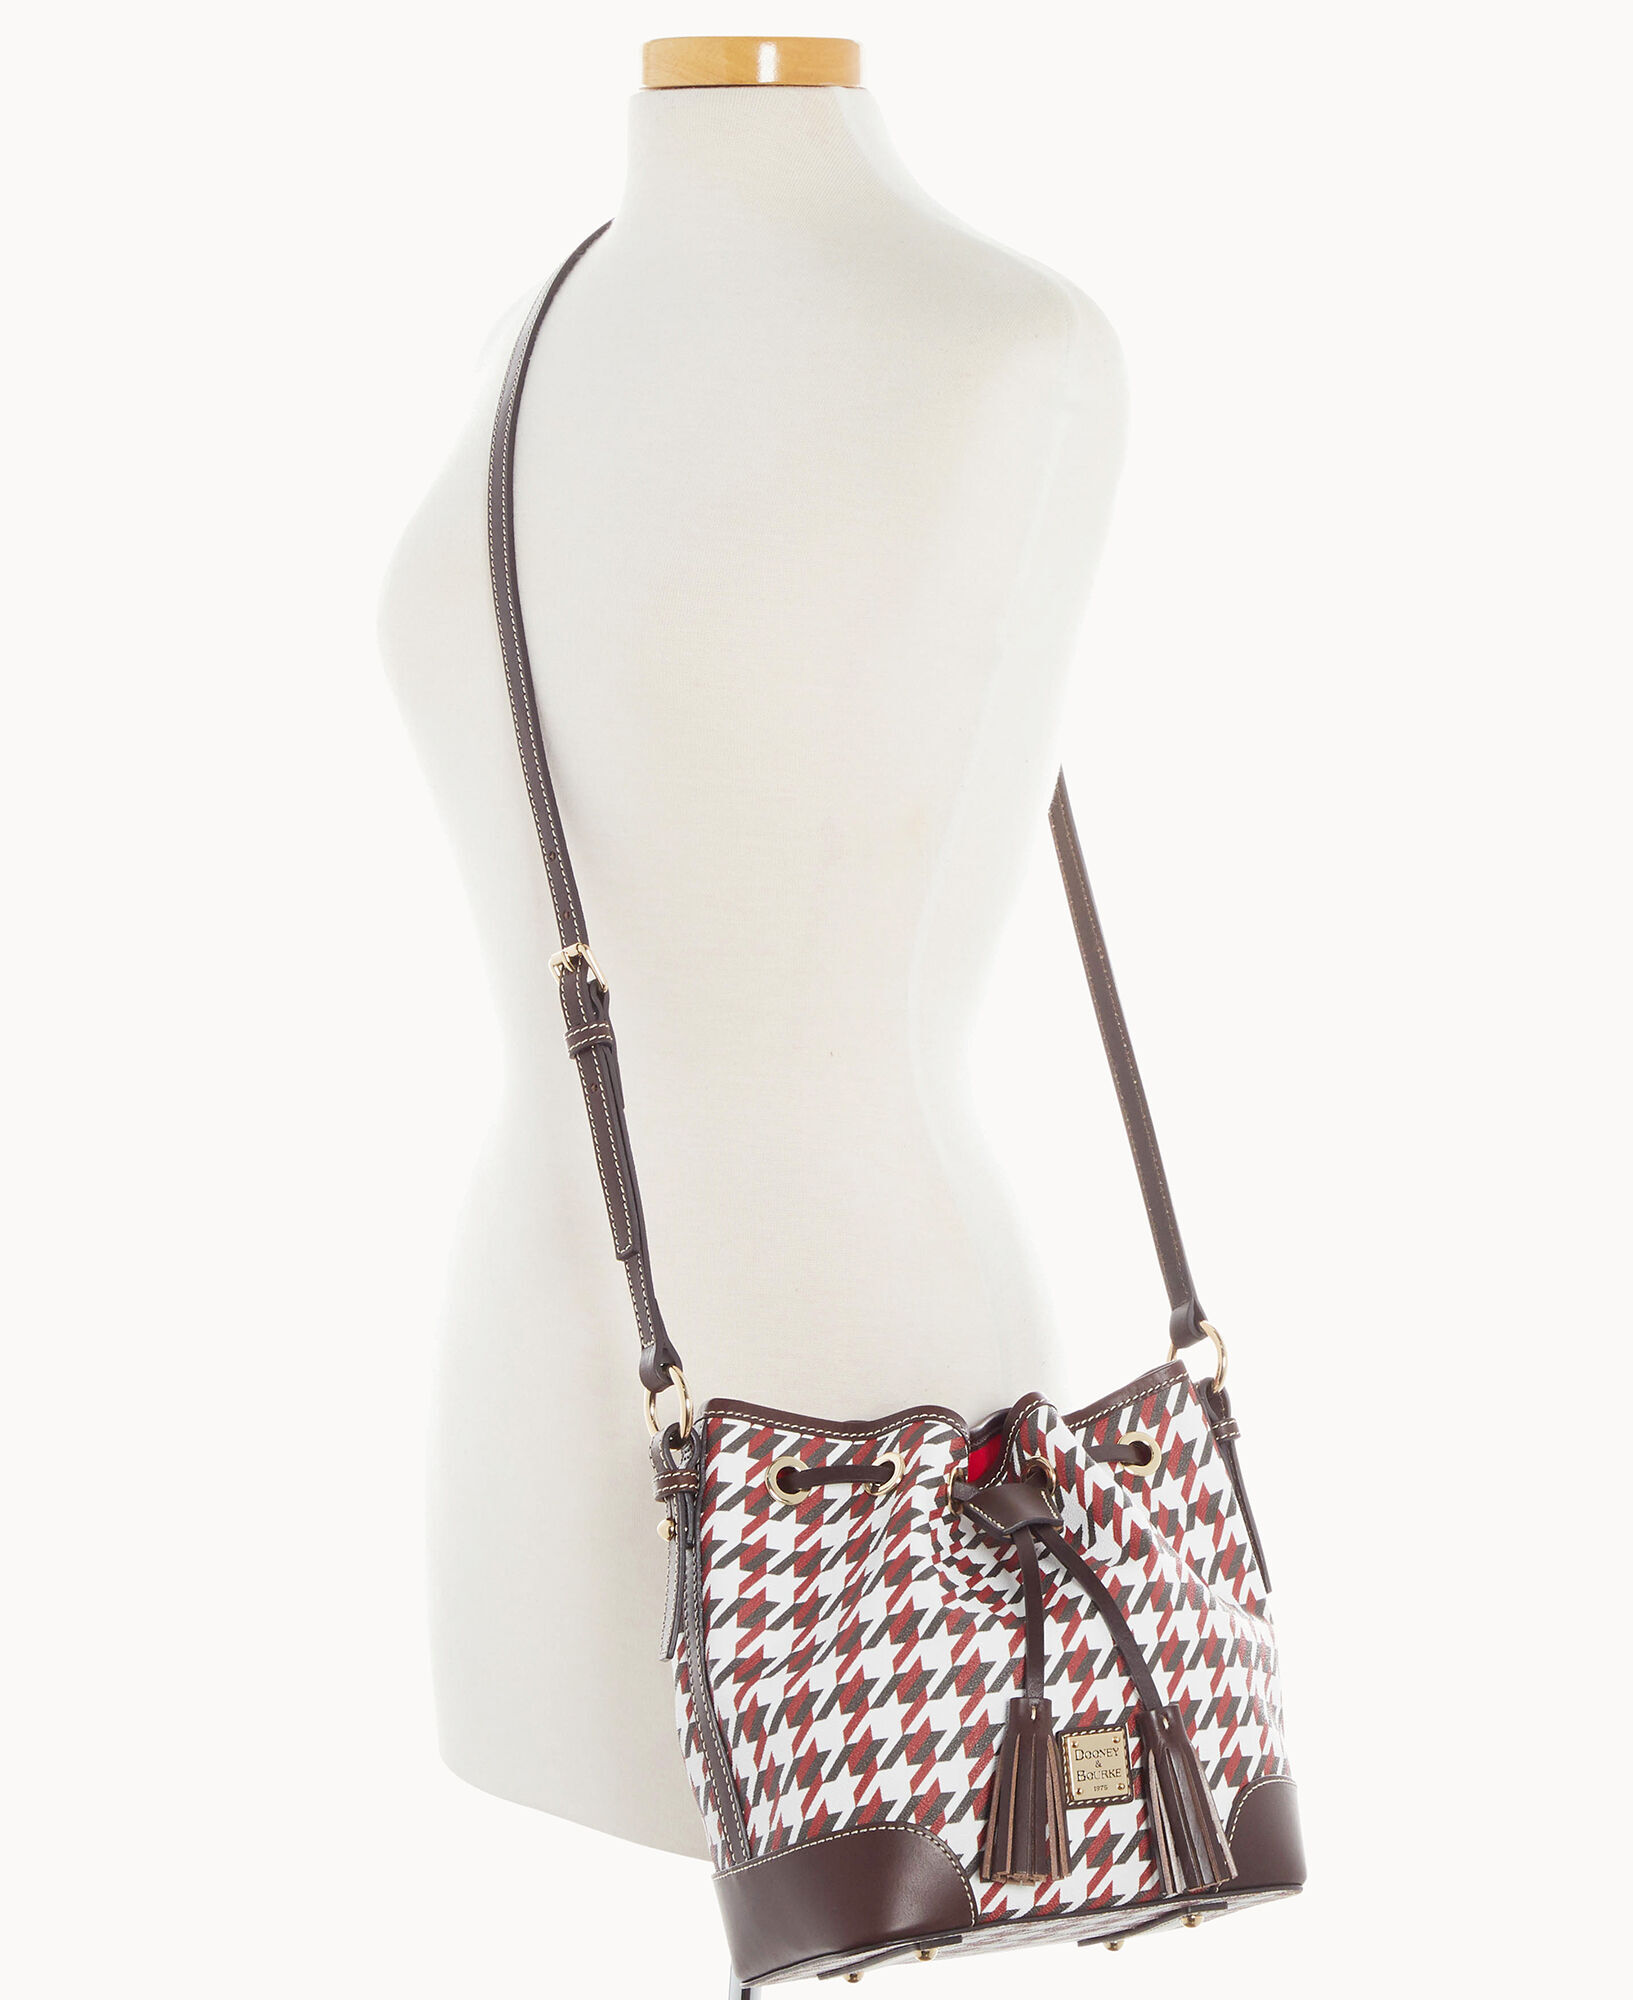 Dooney & Bourke Chain Strap Handbags